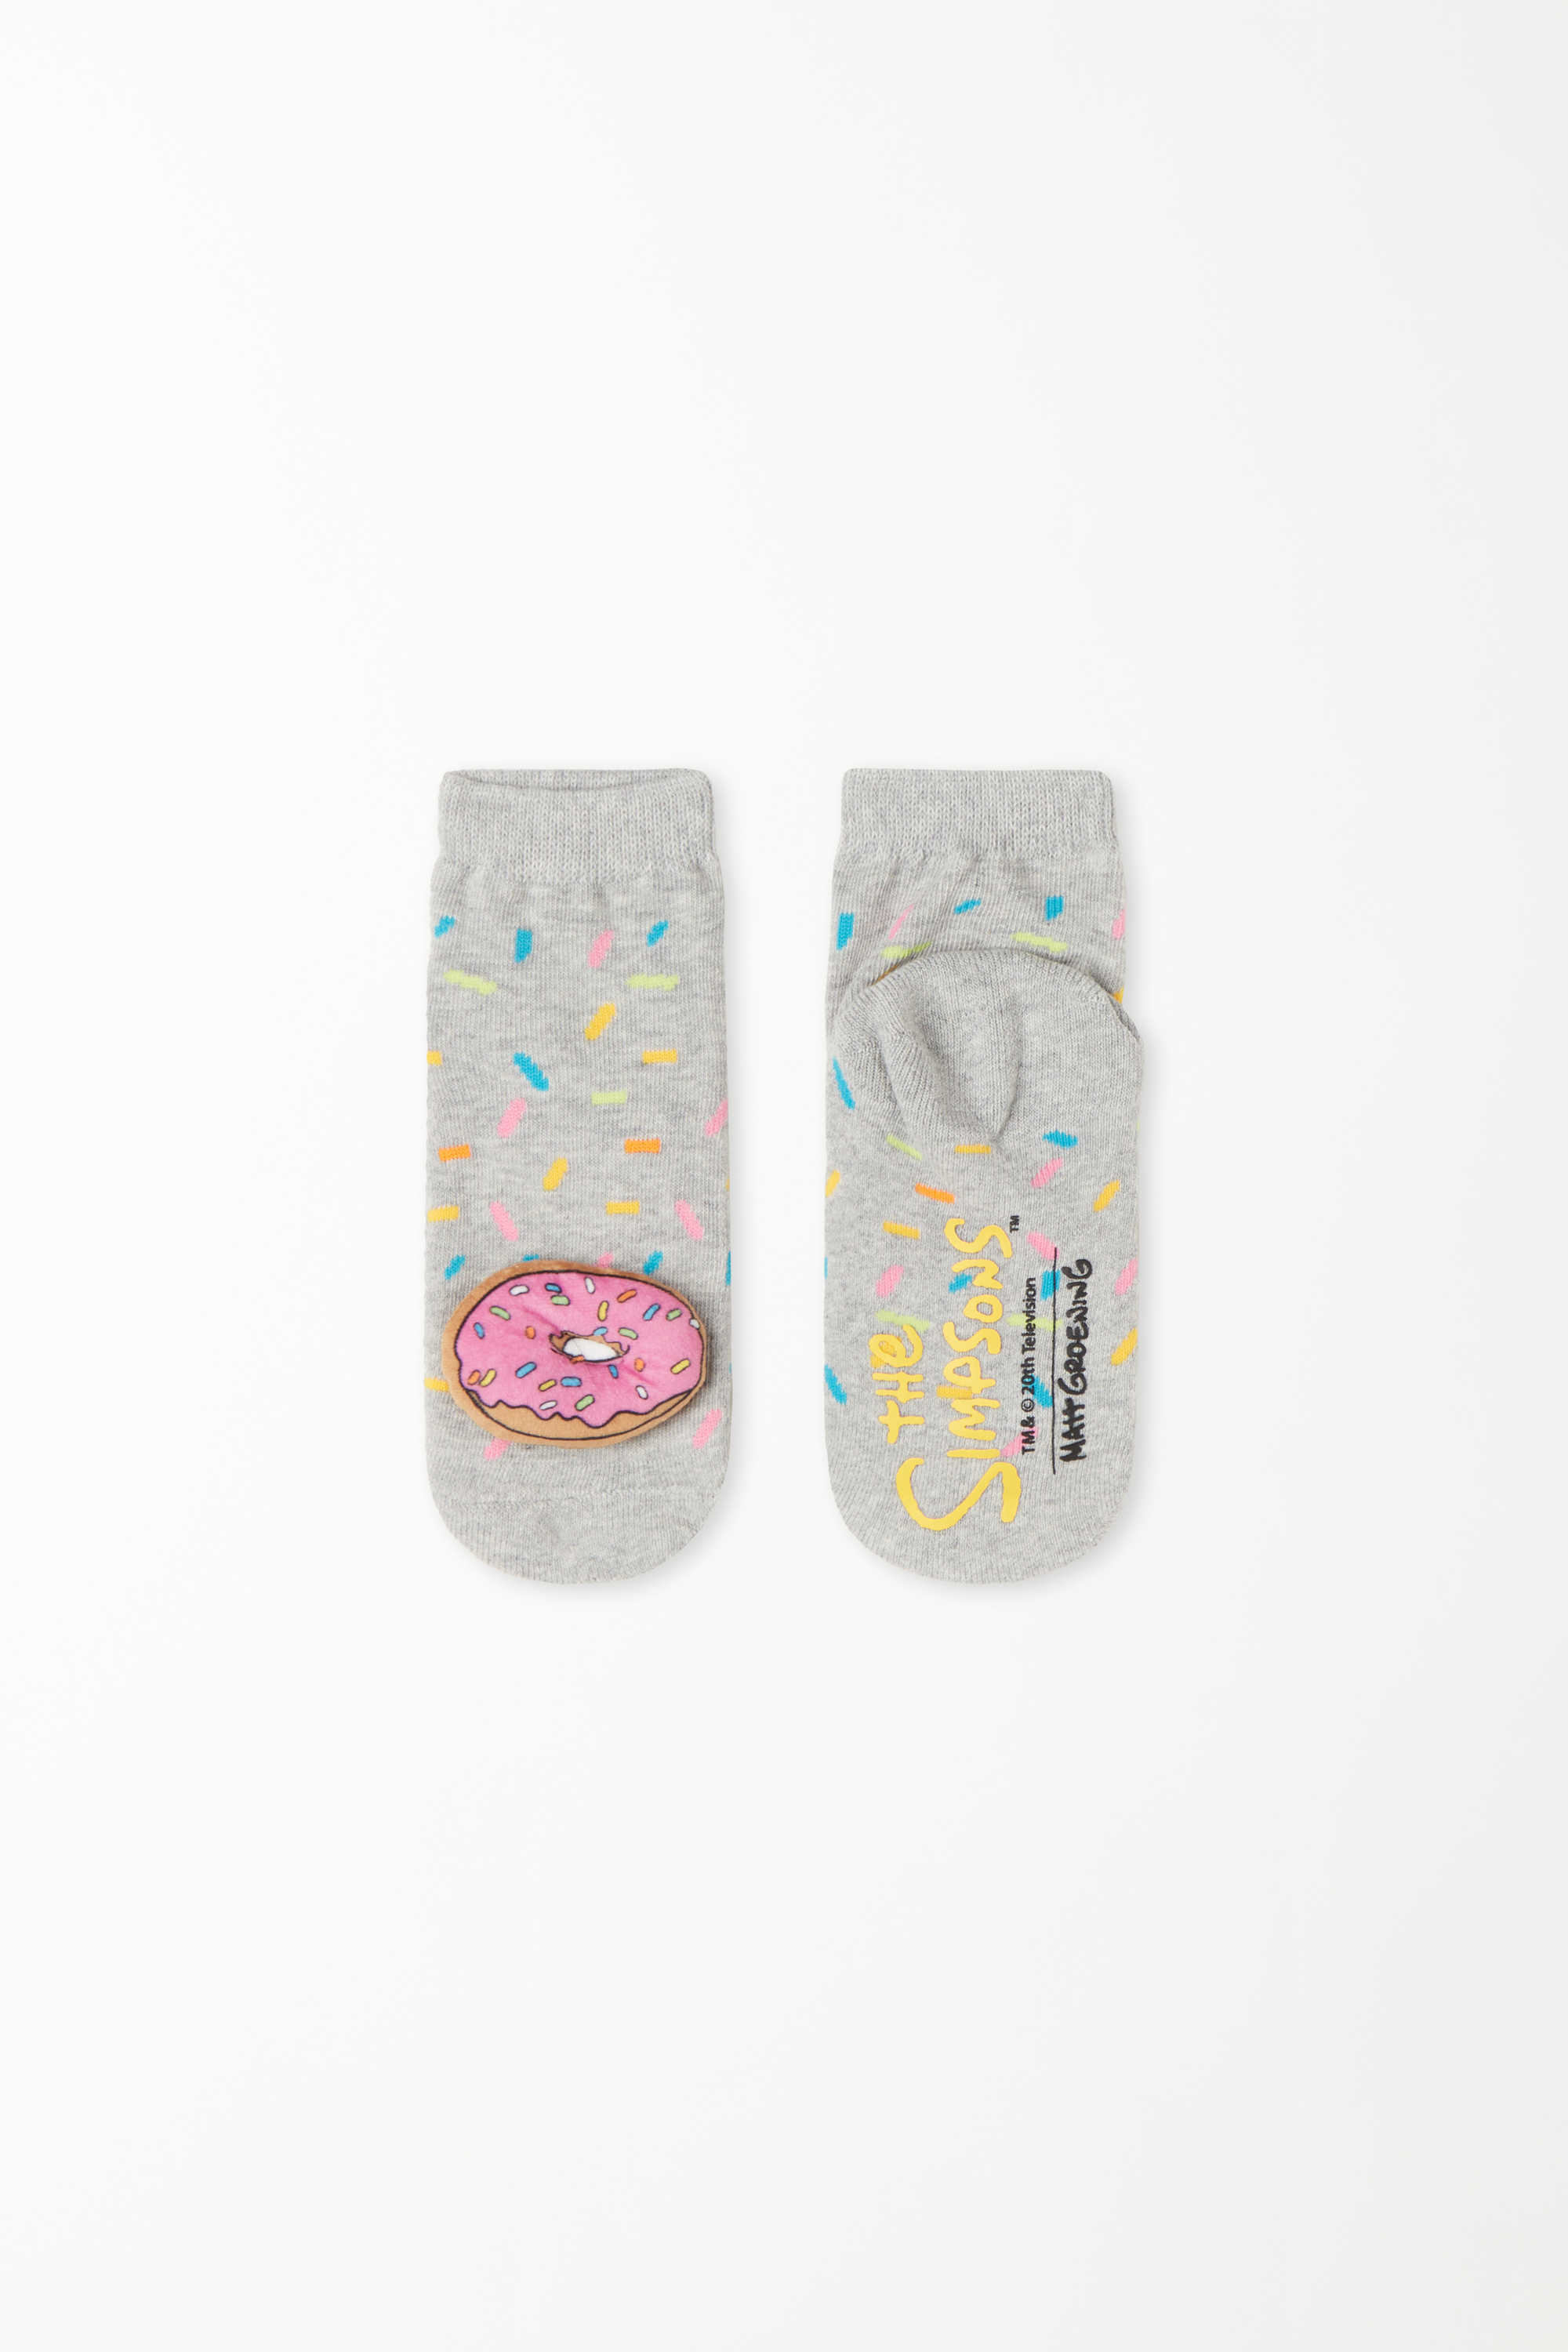 Unisex Kids Non-Slip Socks with The Simpsons Print